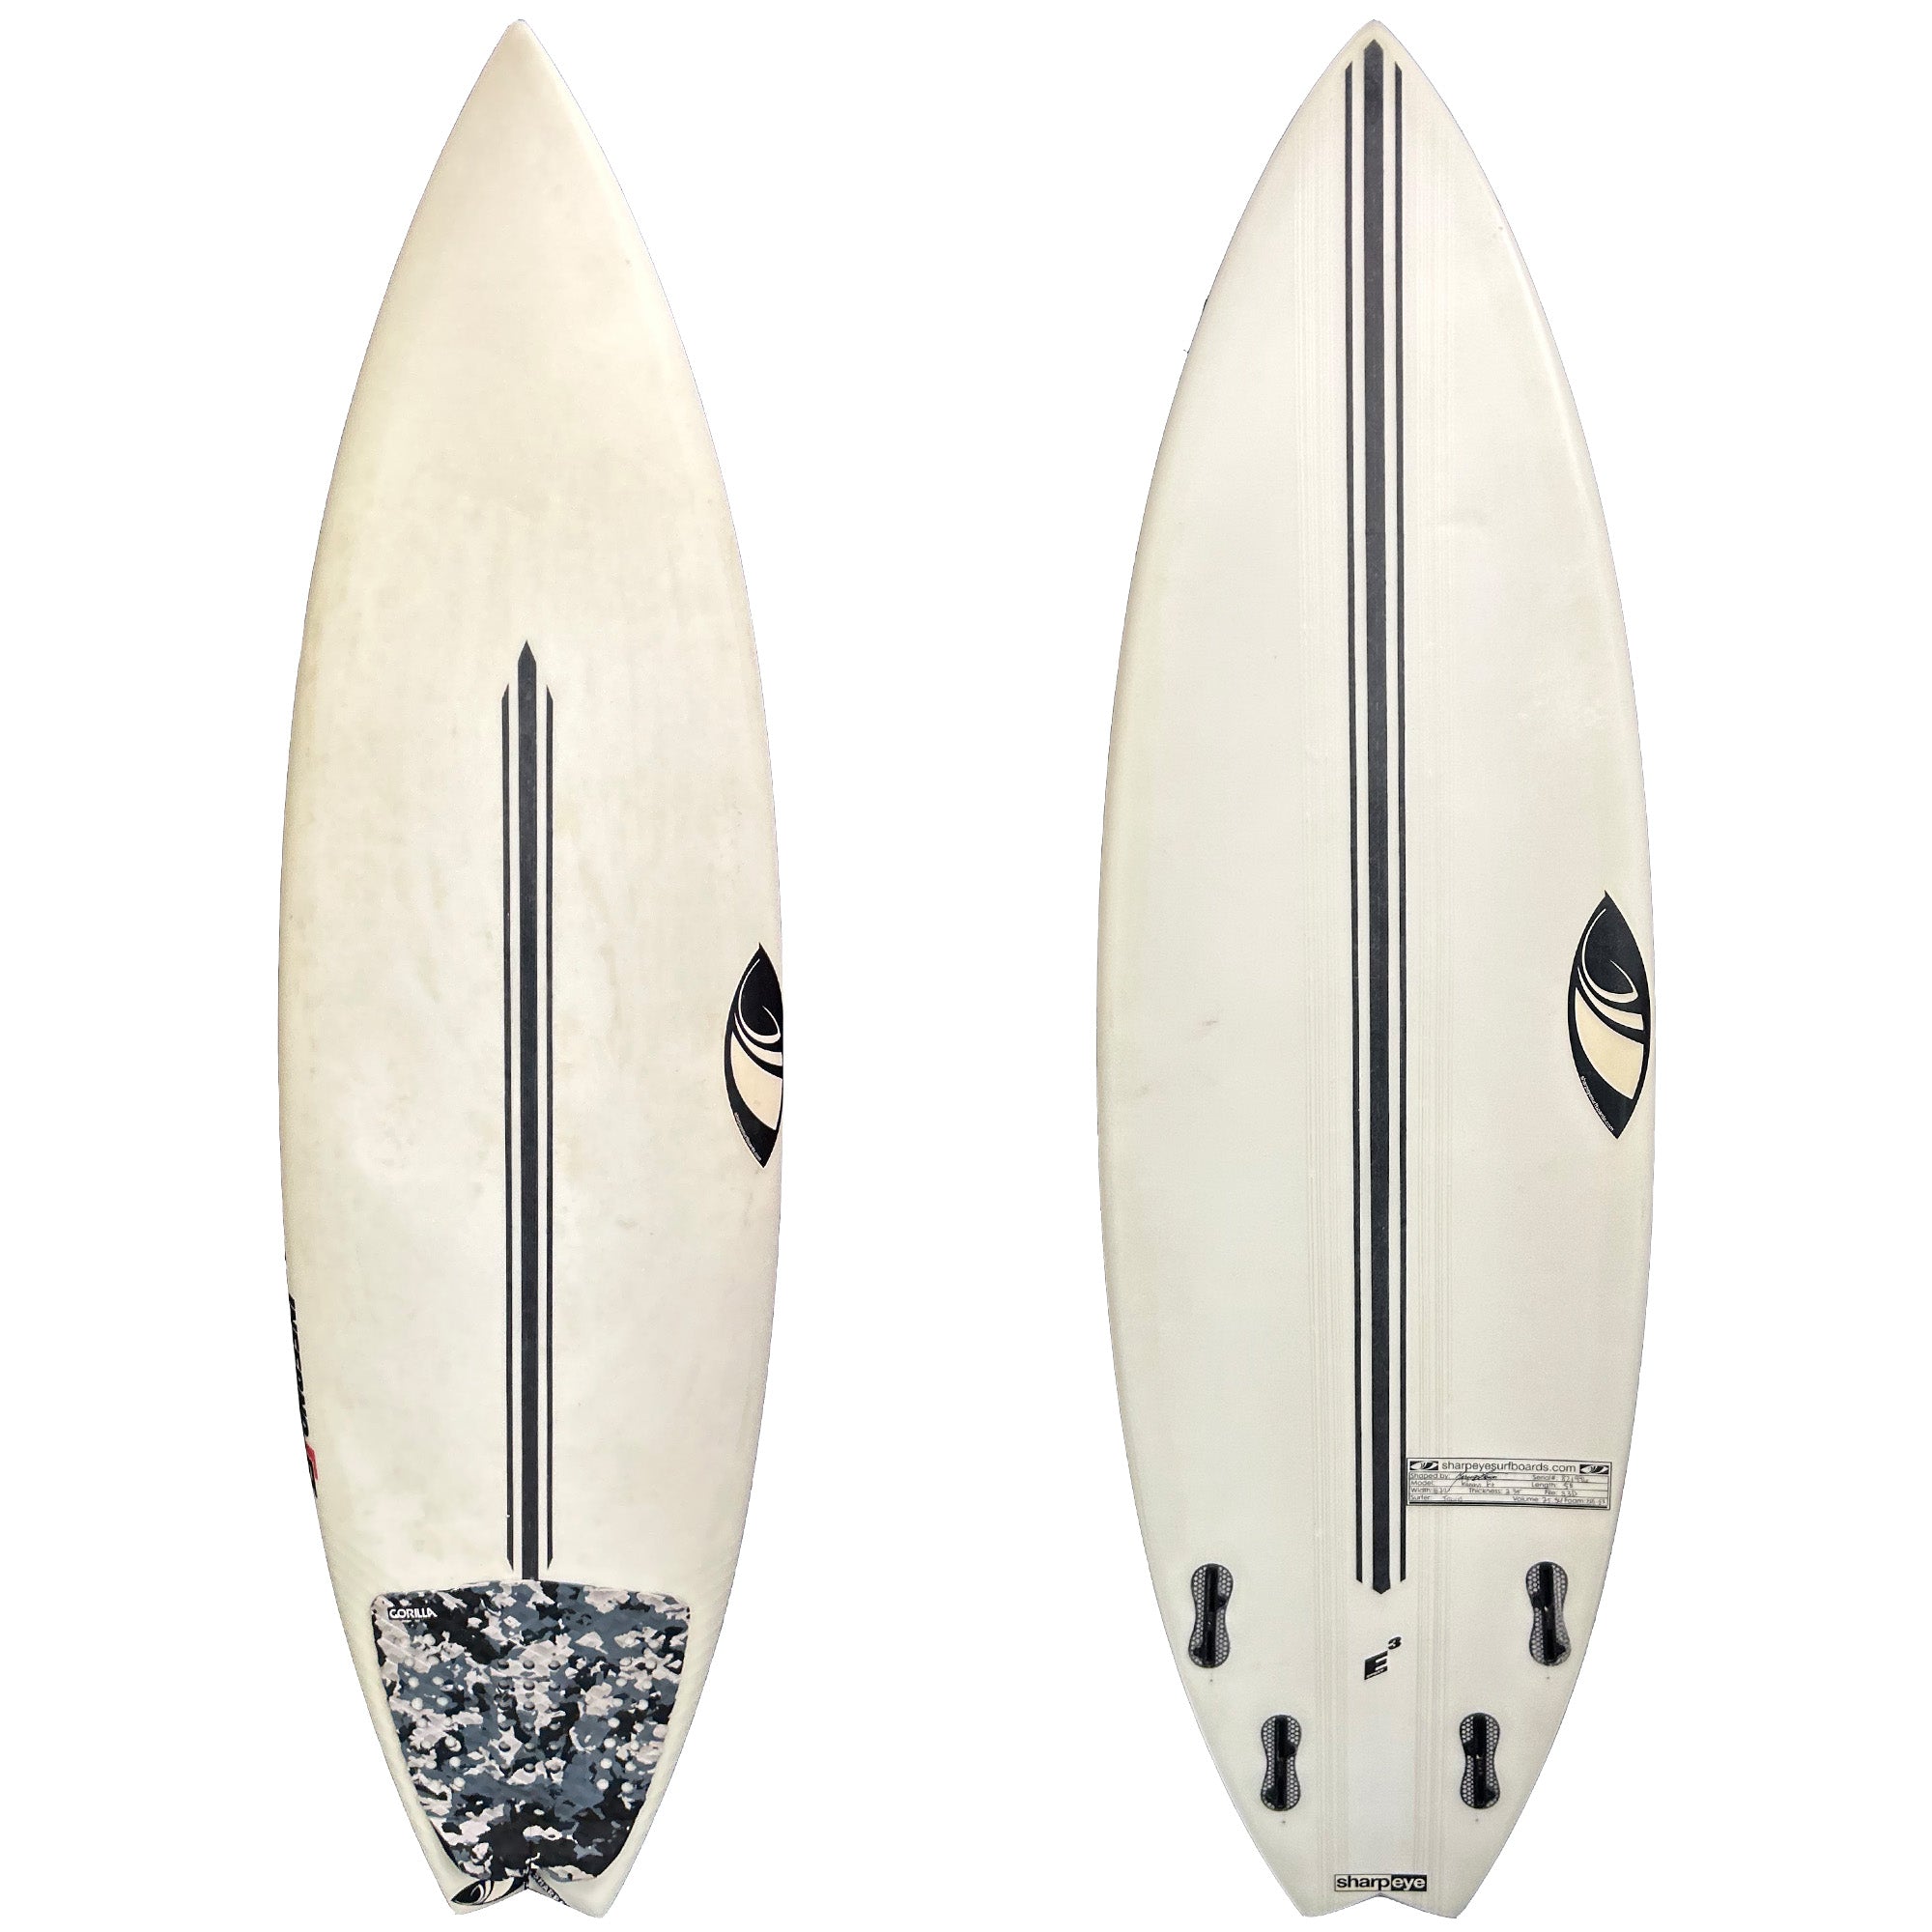 Sharp Eye Inferno FT 5'8 Used Surfboard